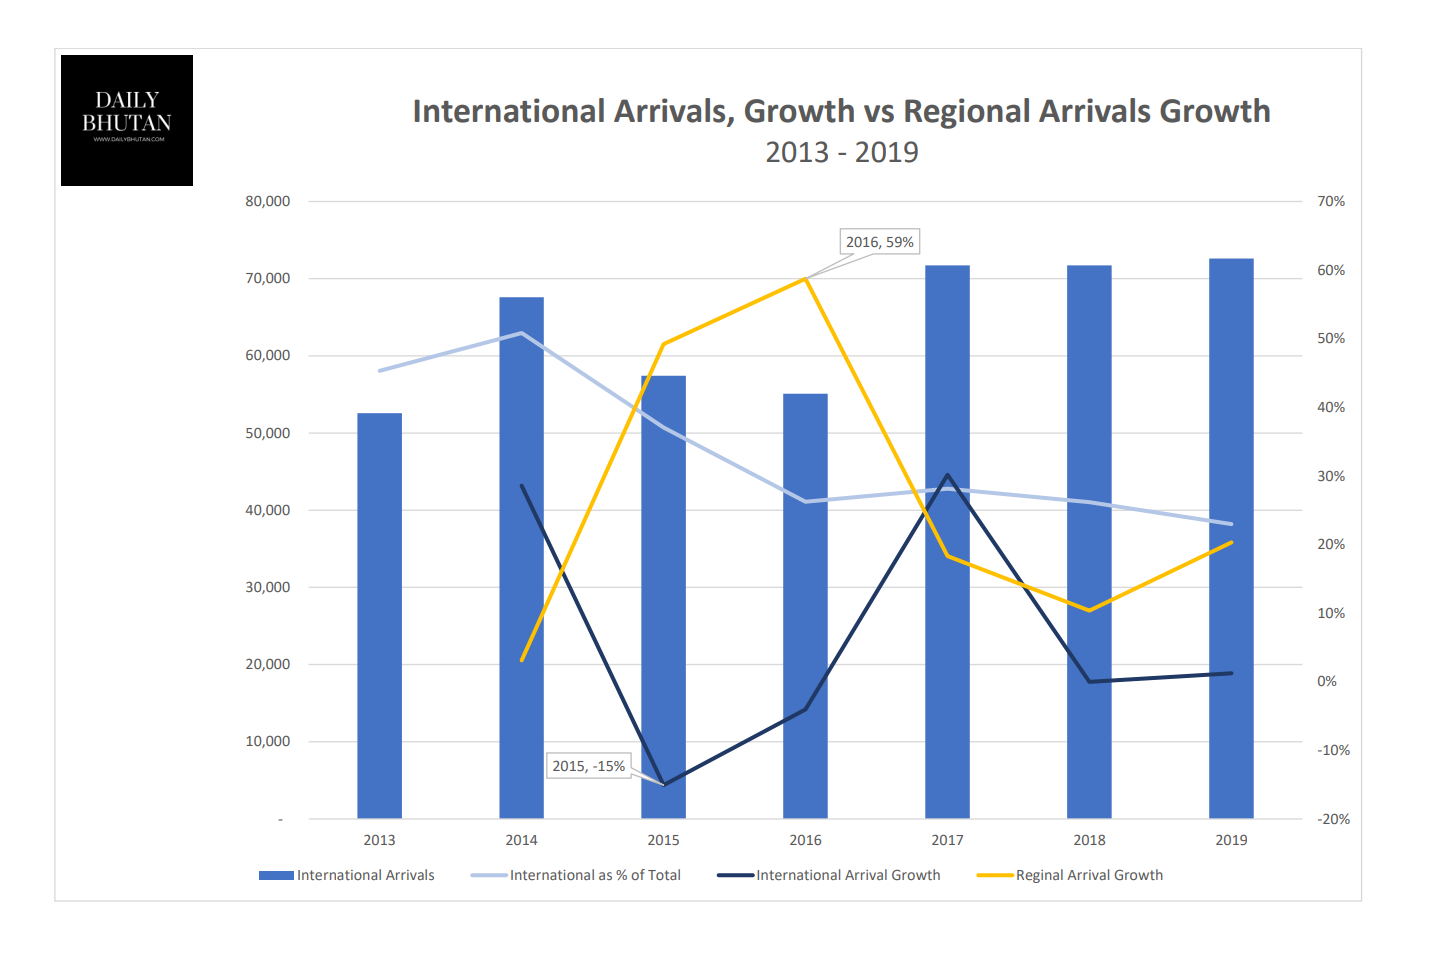 Bhutan International Arrivals, Growth vs Reginal Arrival Growth